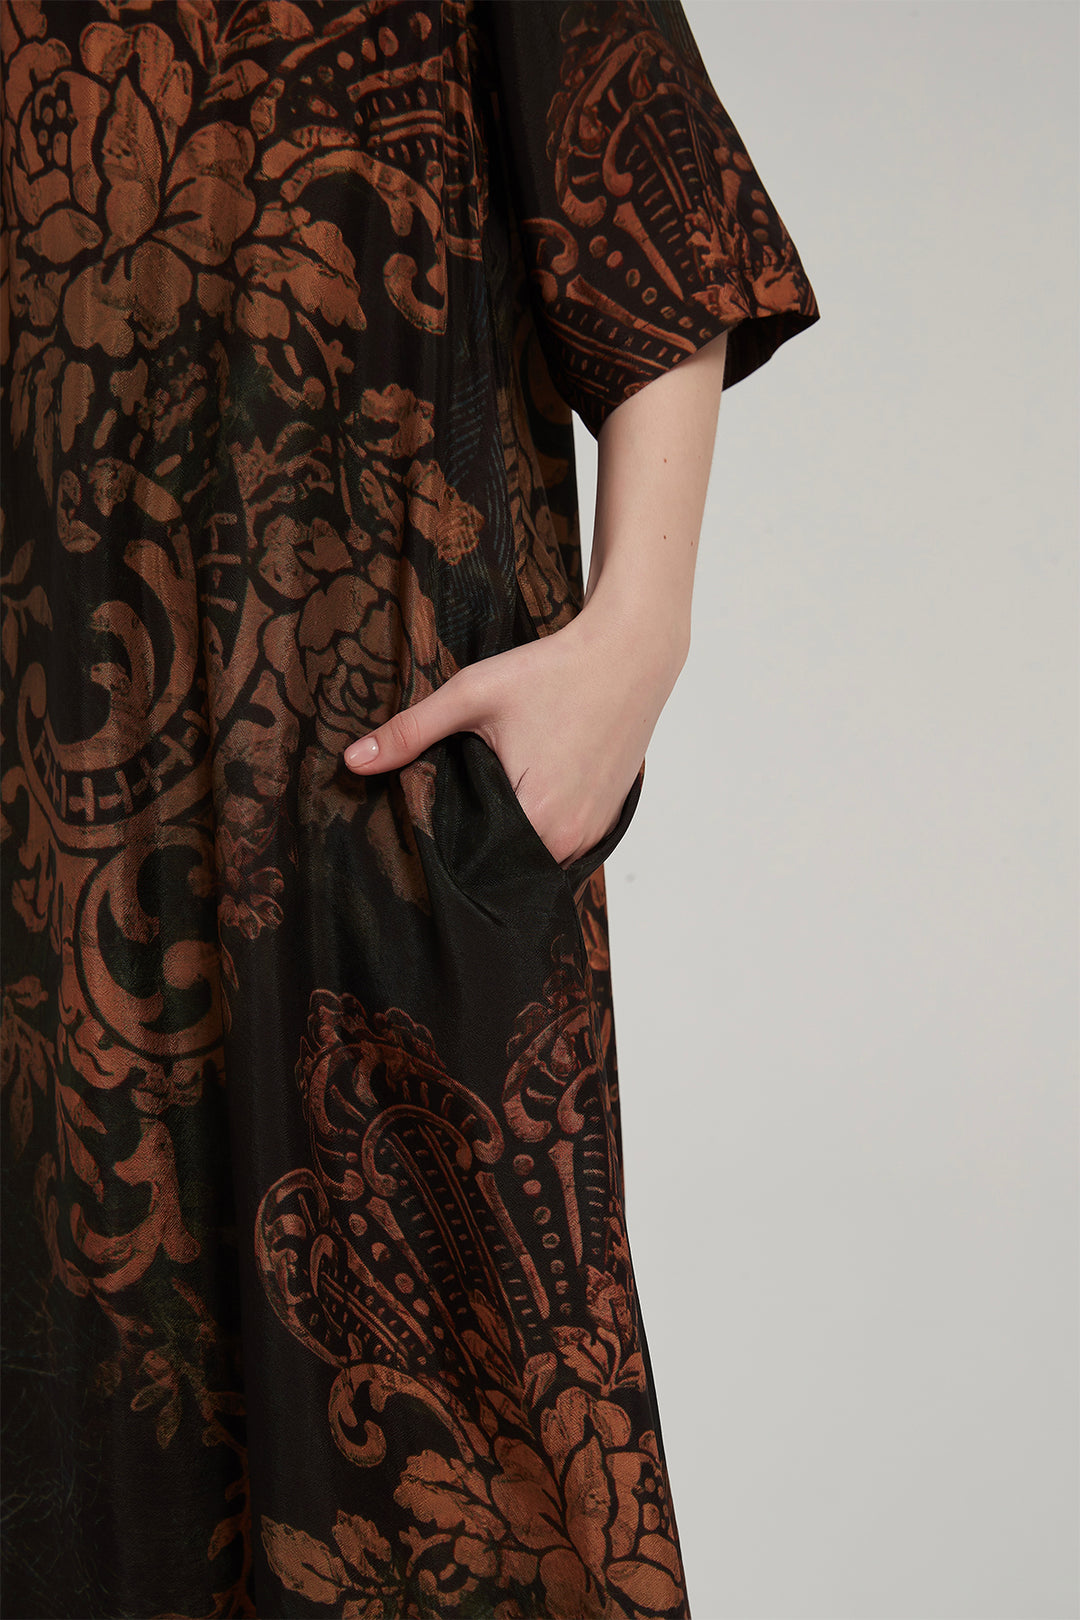 Linda Retro Design Silk Dress